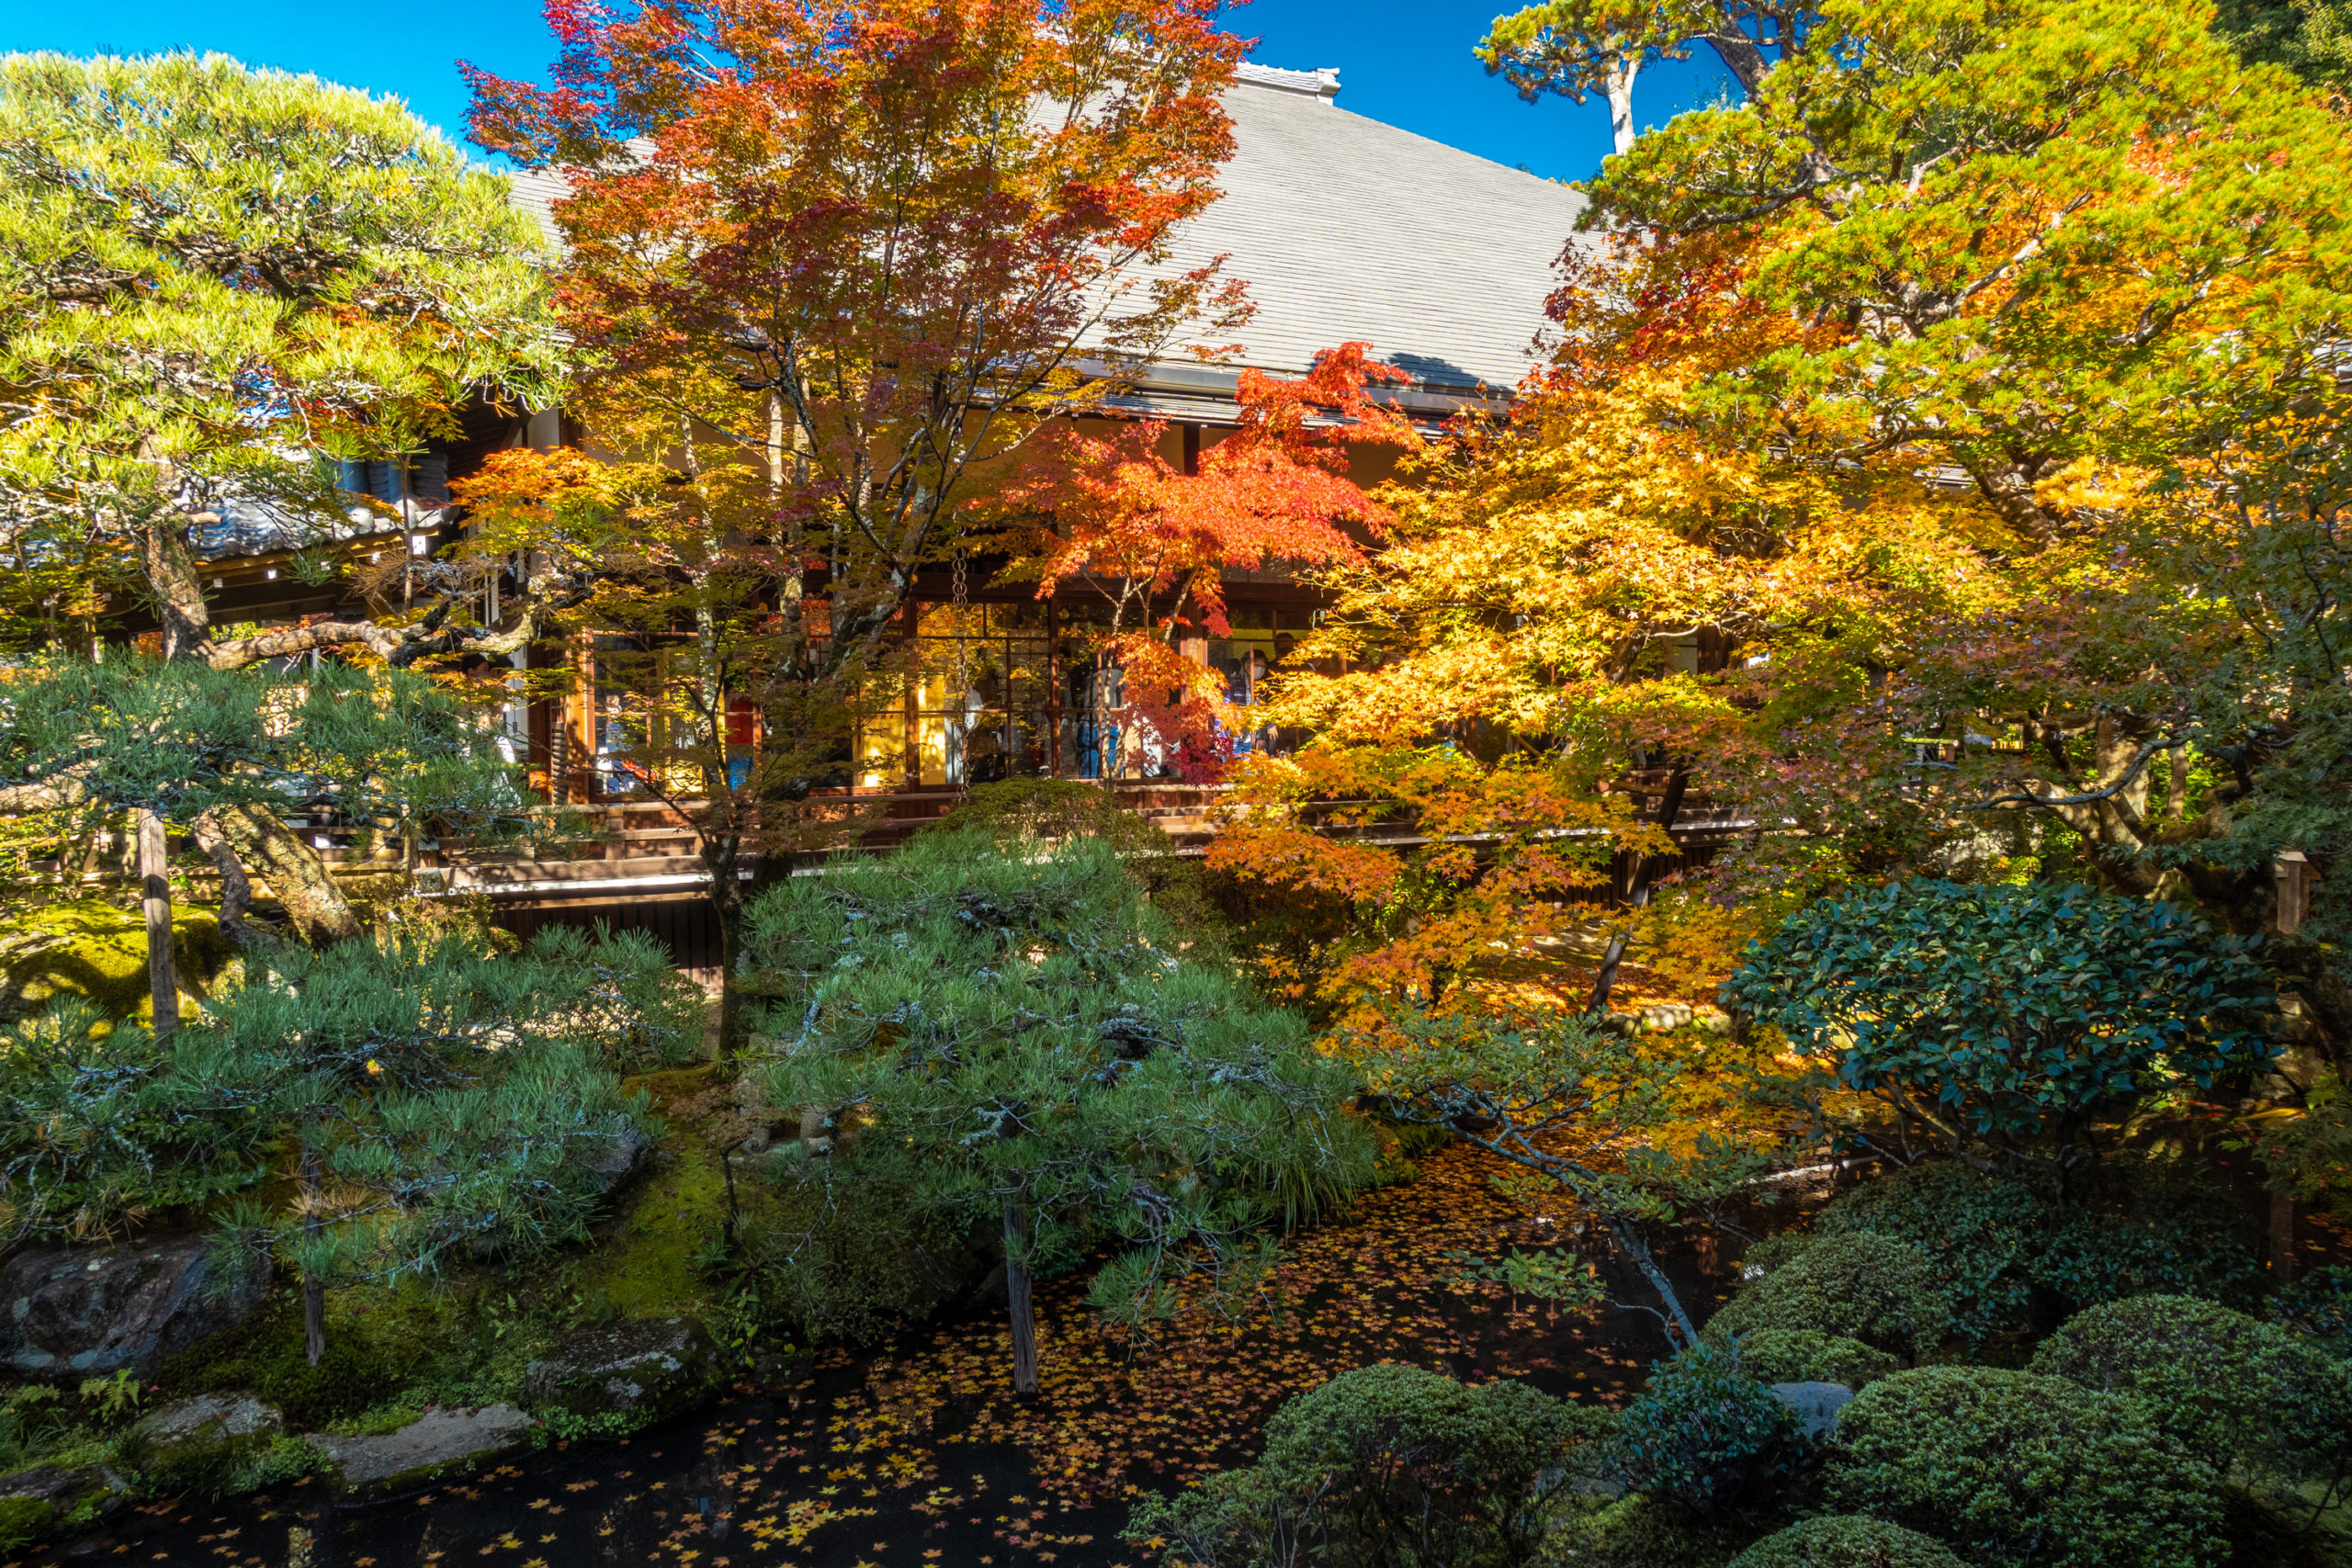 DSC00668-scaled 京都  永観堂-禅林寺(池に映る紅葉の風景が美しい秋におすすめのスポット!撮影した写真の紹介、アクセス情報・ライトアップ情報など)